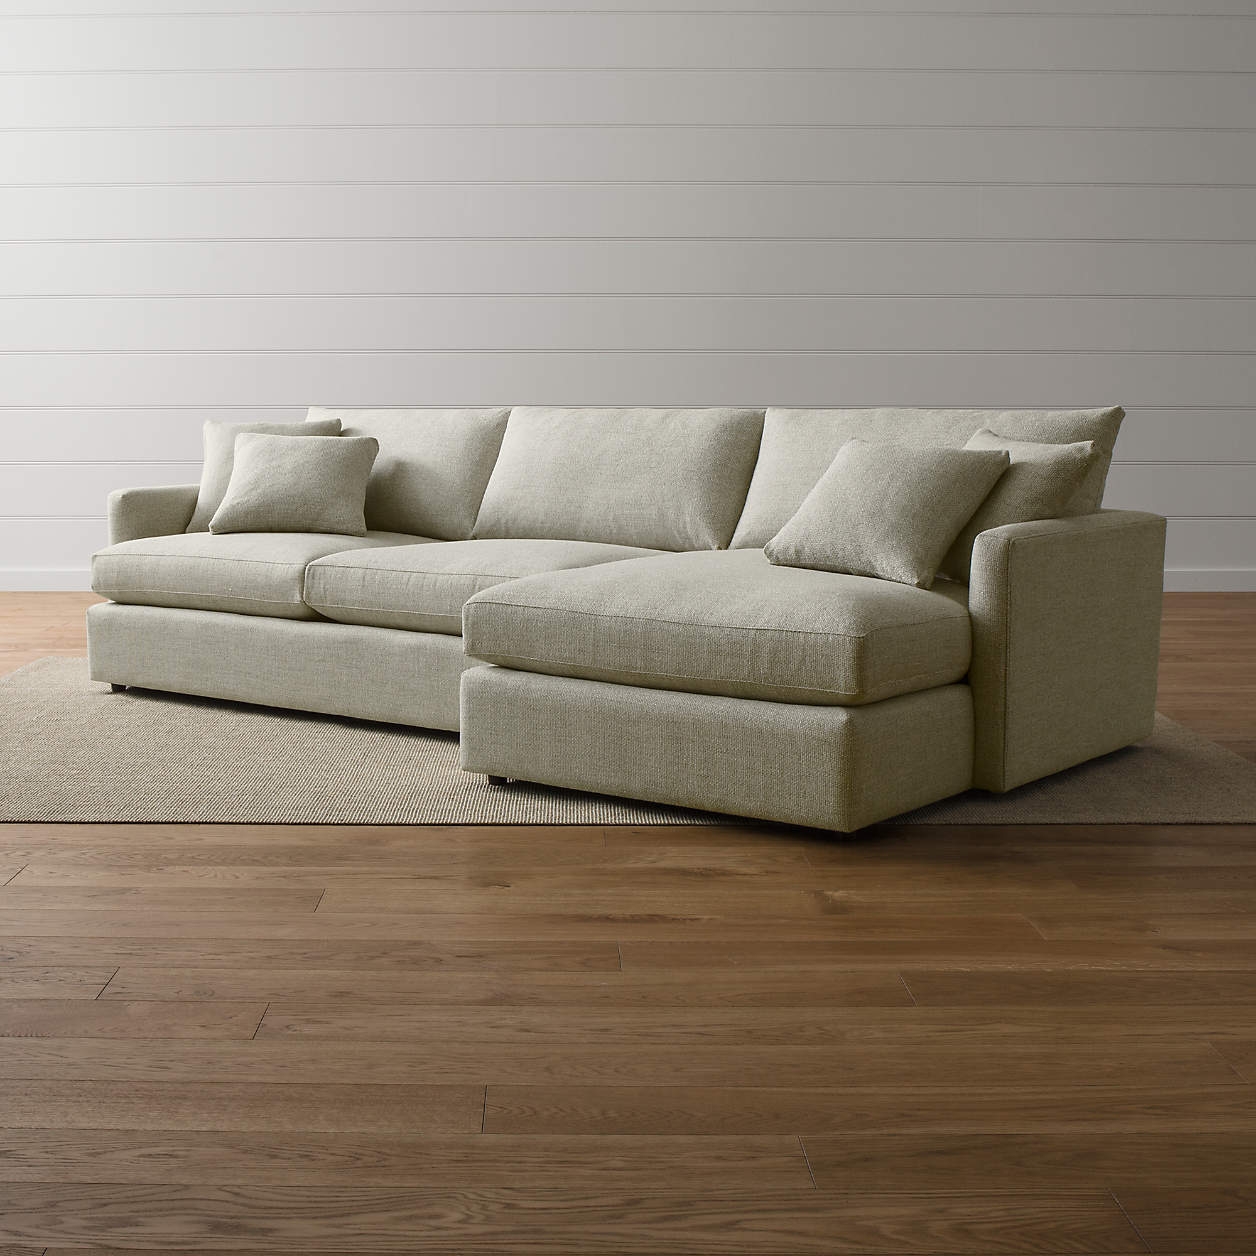 Lounge II 2-Piece Sectional Sofa - Taft Cement - Image 1